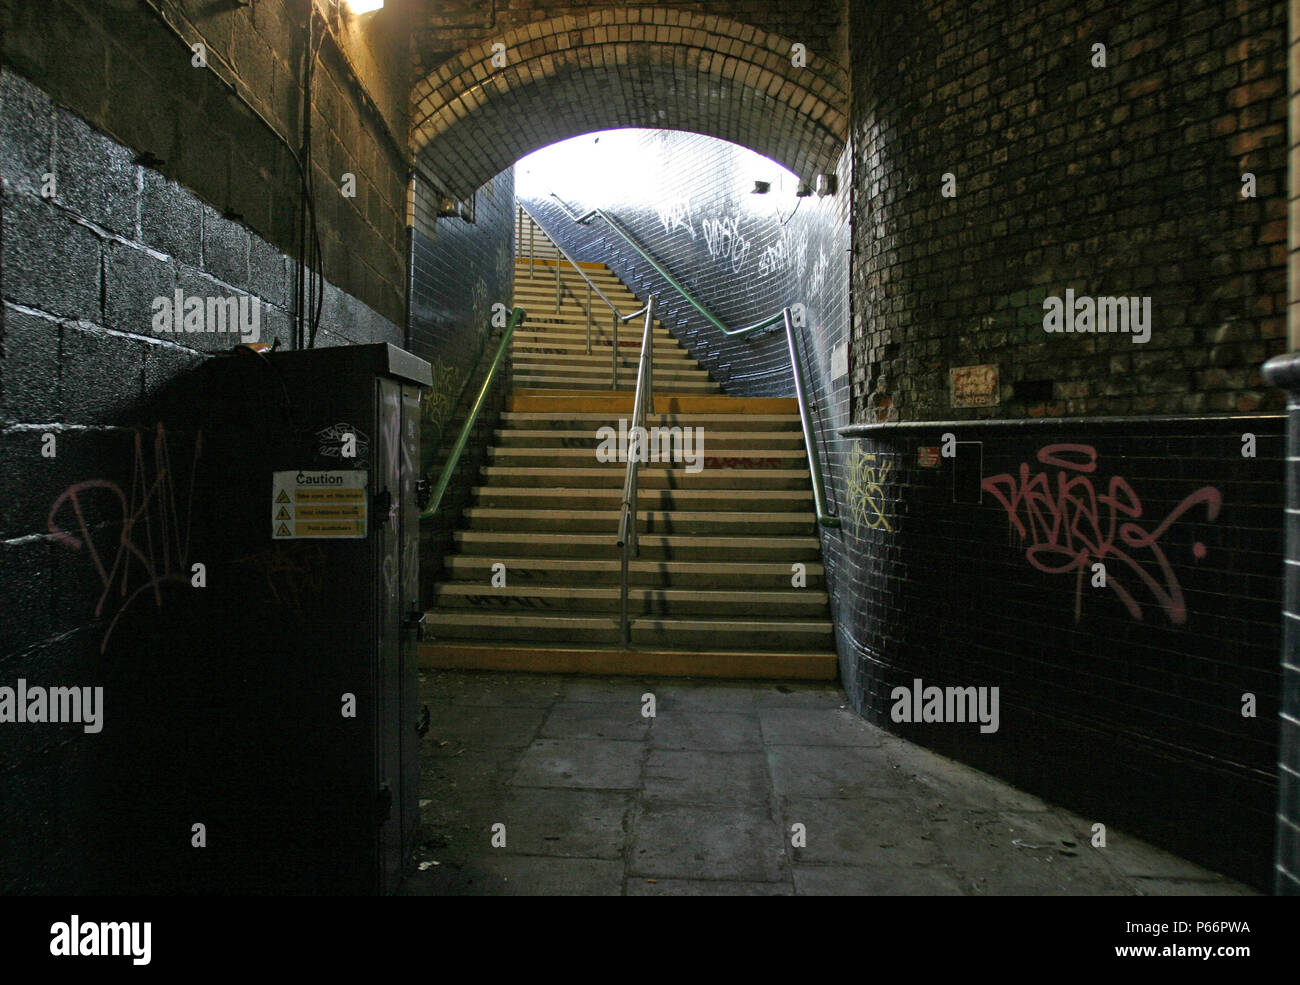 Graffiti scrawled walls in the pedestrian subway at Bordesley station, Birmingham. 2007 Stock Photo